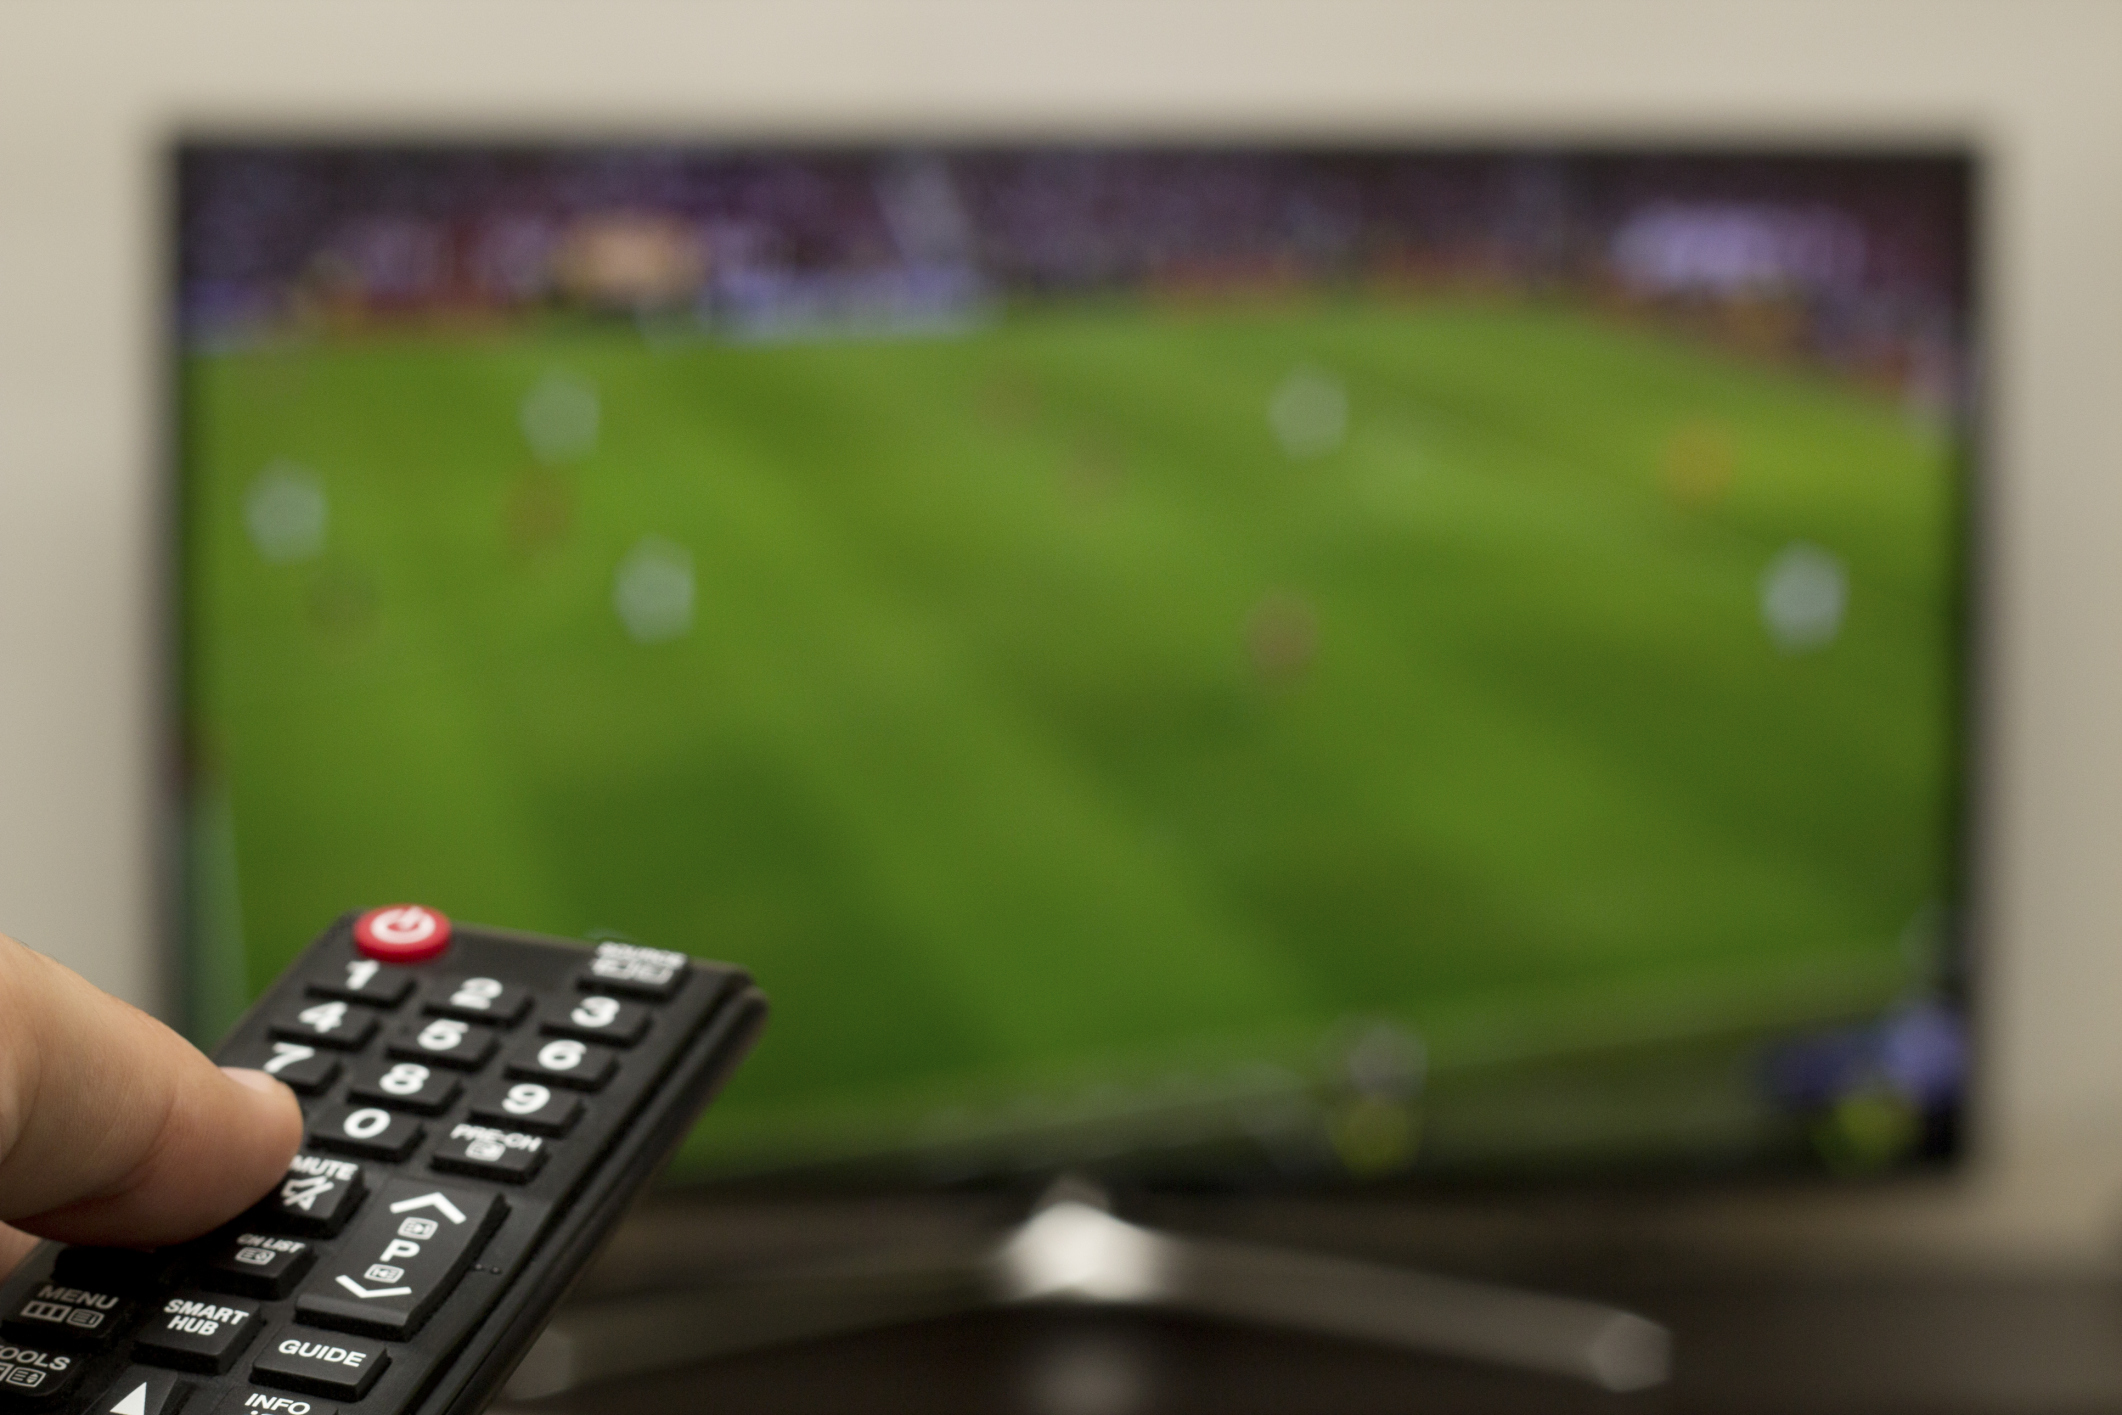 Будет футбол телевизору. Телевизор футбол. Футбол по телевизору. Футбольный матч в телевизоре. Футбол на экране телевизора.